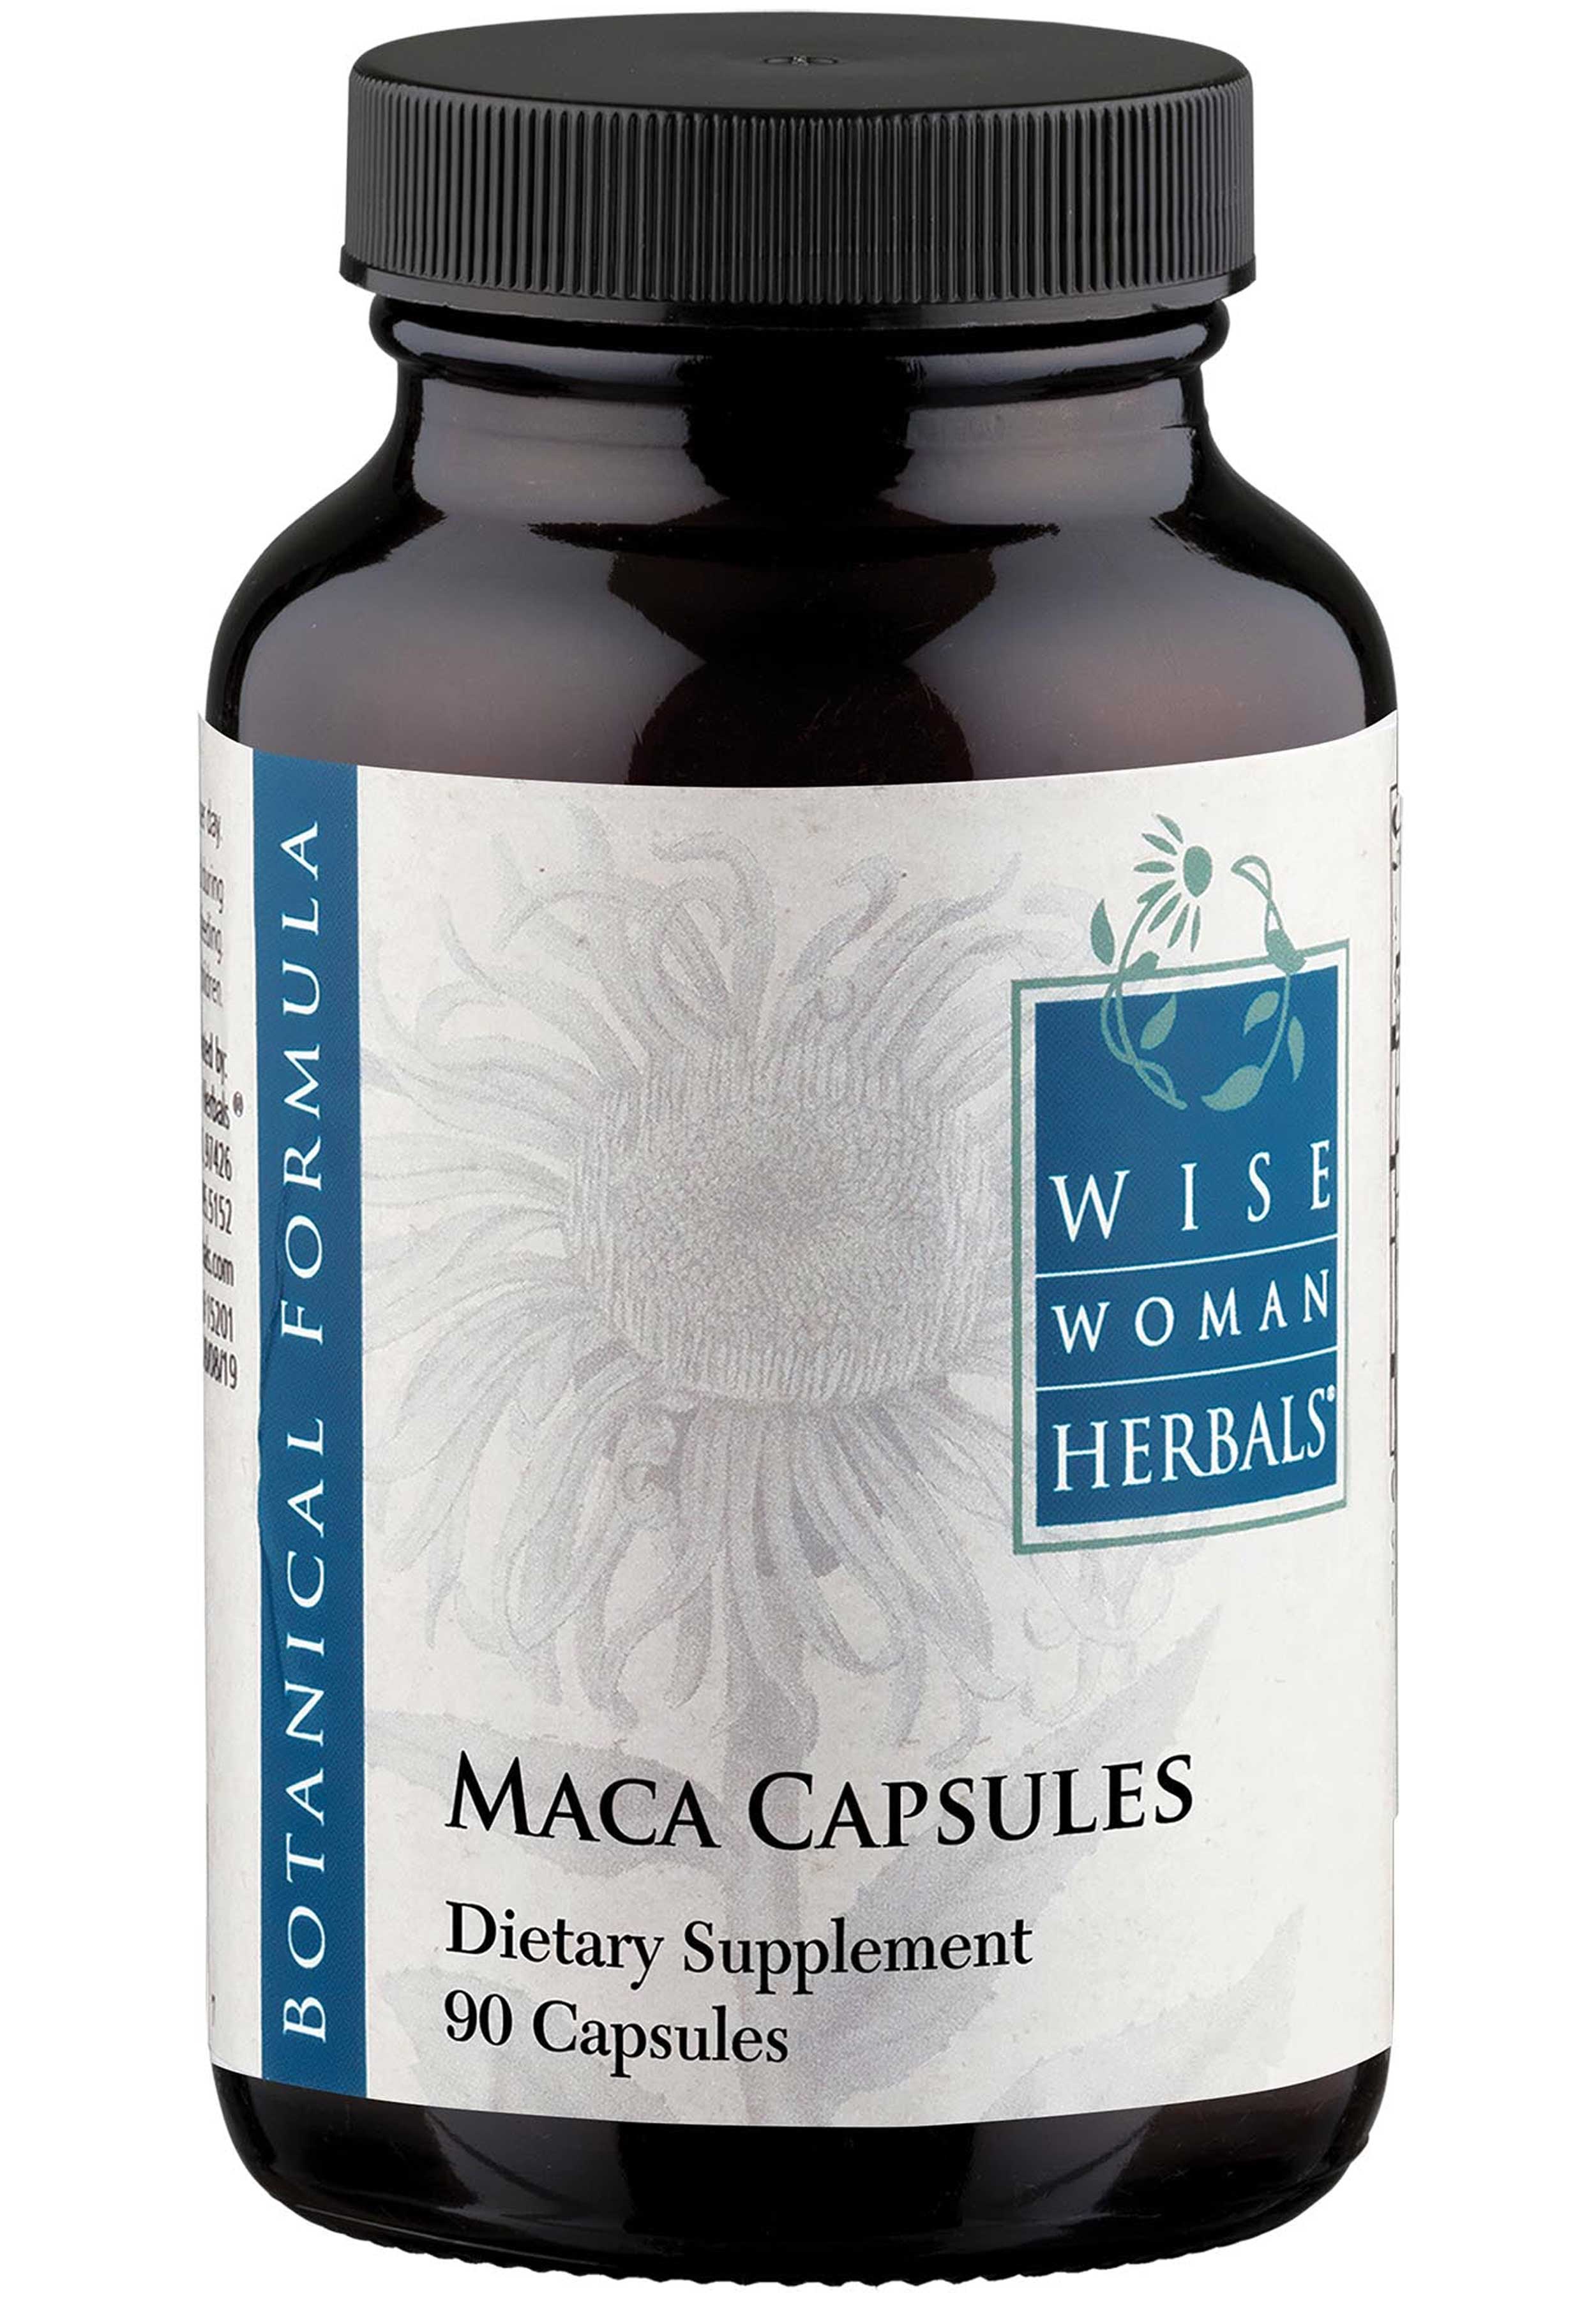 Wise Woman Herbals Maca Capsules